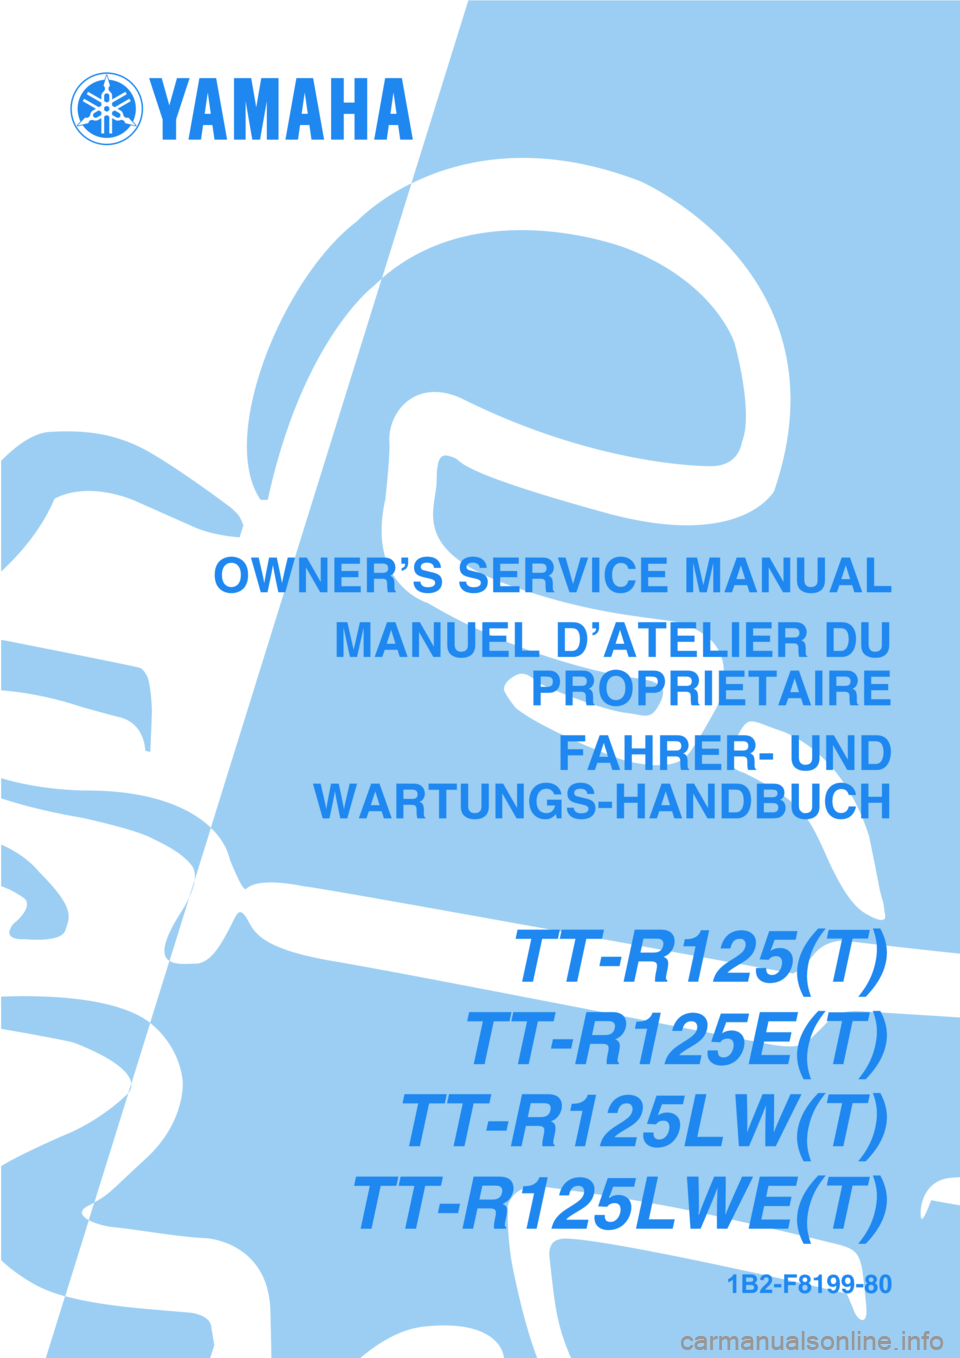 YAMAHA TTR125 2005  Notices Demploi (in French) 1B2-F8199-80
OWNER’S SERVICE MANUALMANUEL D’ATELIER DU PROPRIETAIRE
FAHRER- UND
WARTUNGS-HANDBUCH
TT-R125(T)
TT-R125E(T)
TT-R125LW(T)
TT-R125LWE(T) 